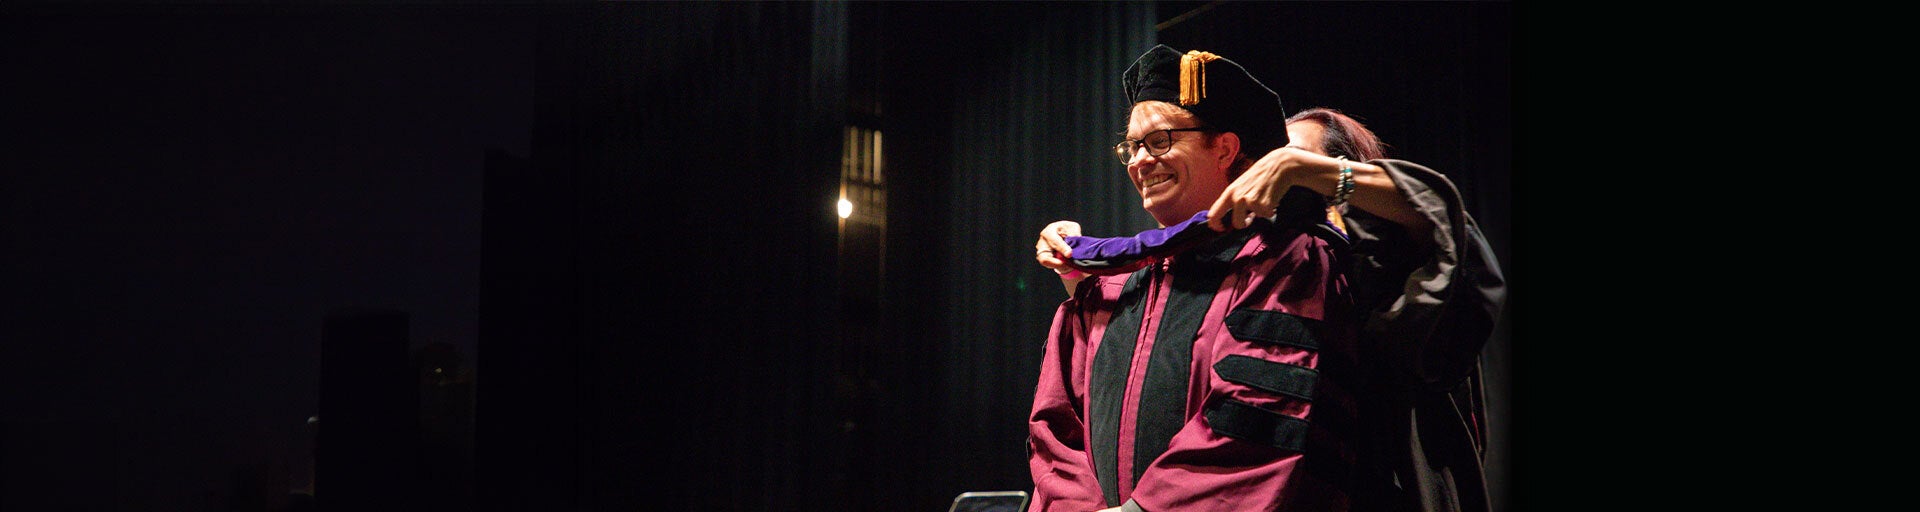 Professor Kate Rosier placing ceremonial graduation robe on Juris Doctor graduate student.